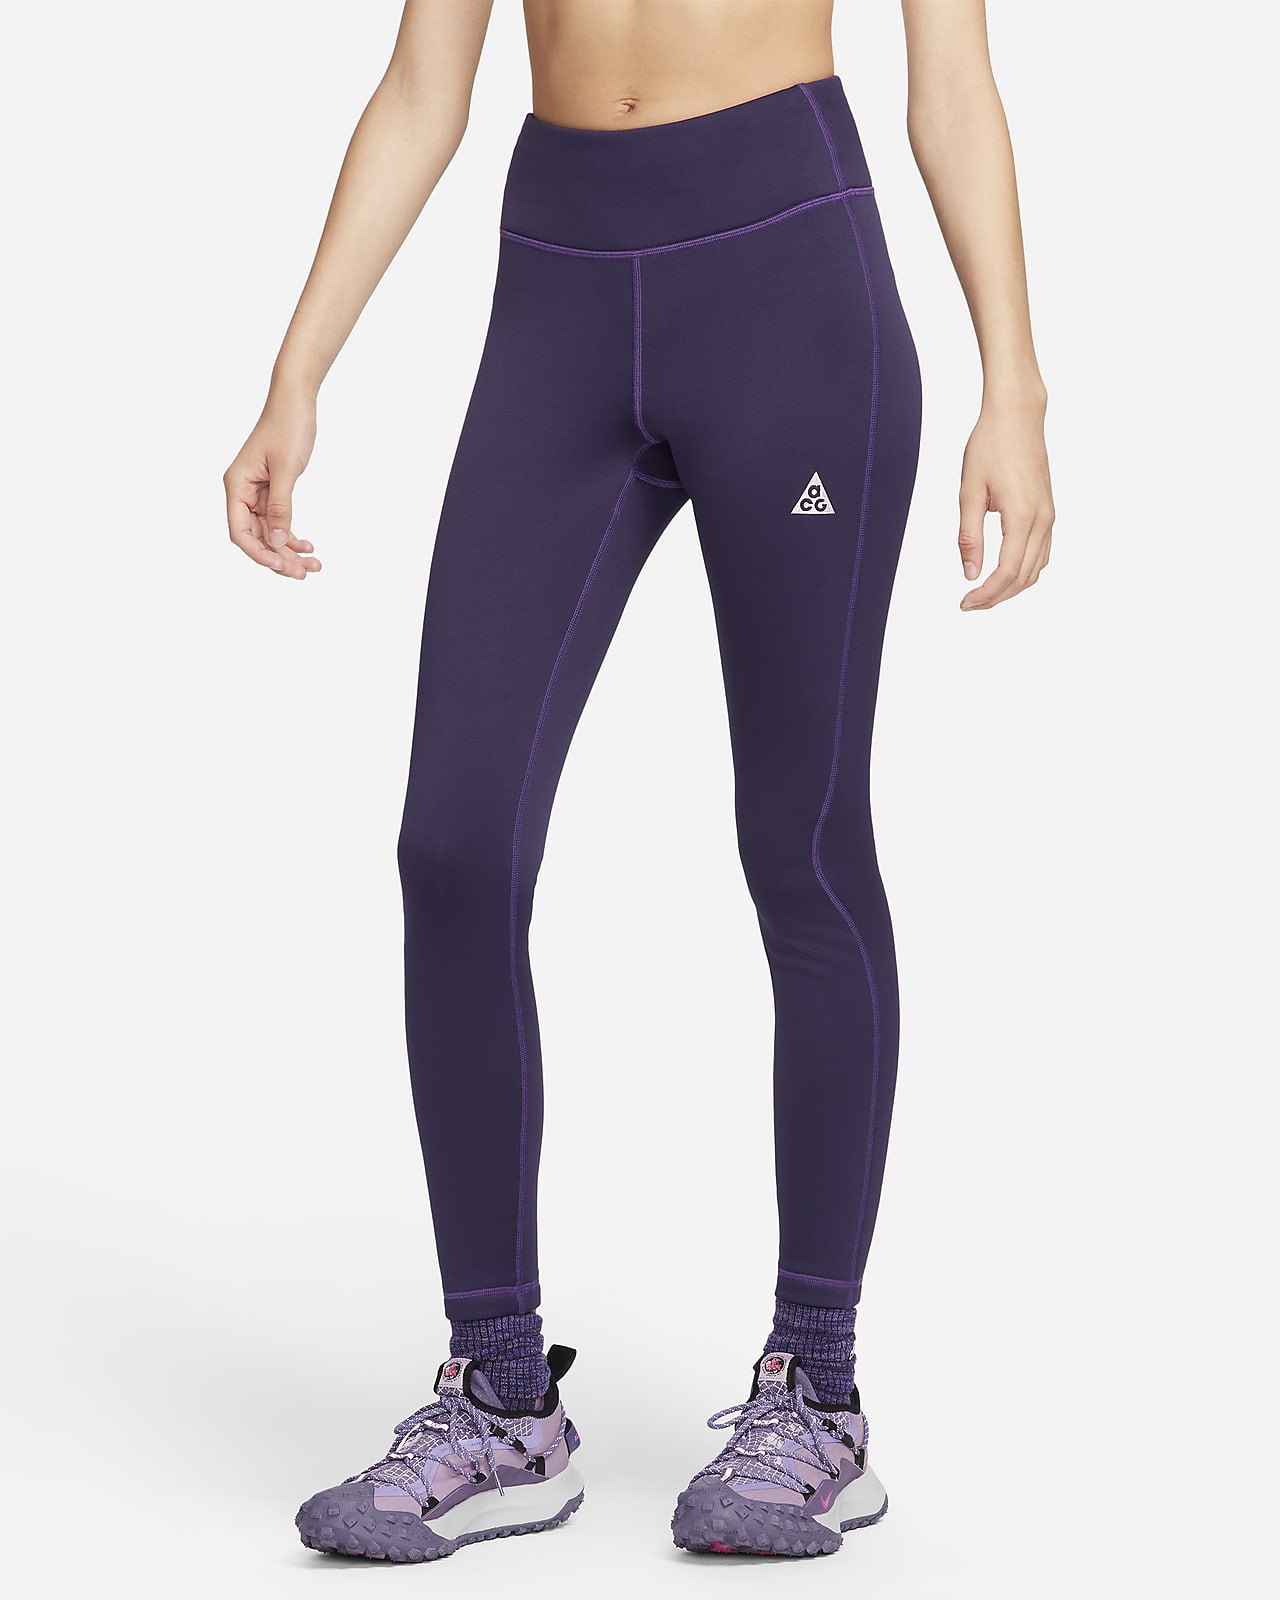 Nike Yoga Infinalon Dri-Fit 3/4 Legging Men Size XL Active Performance Pant  Gray | eBay